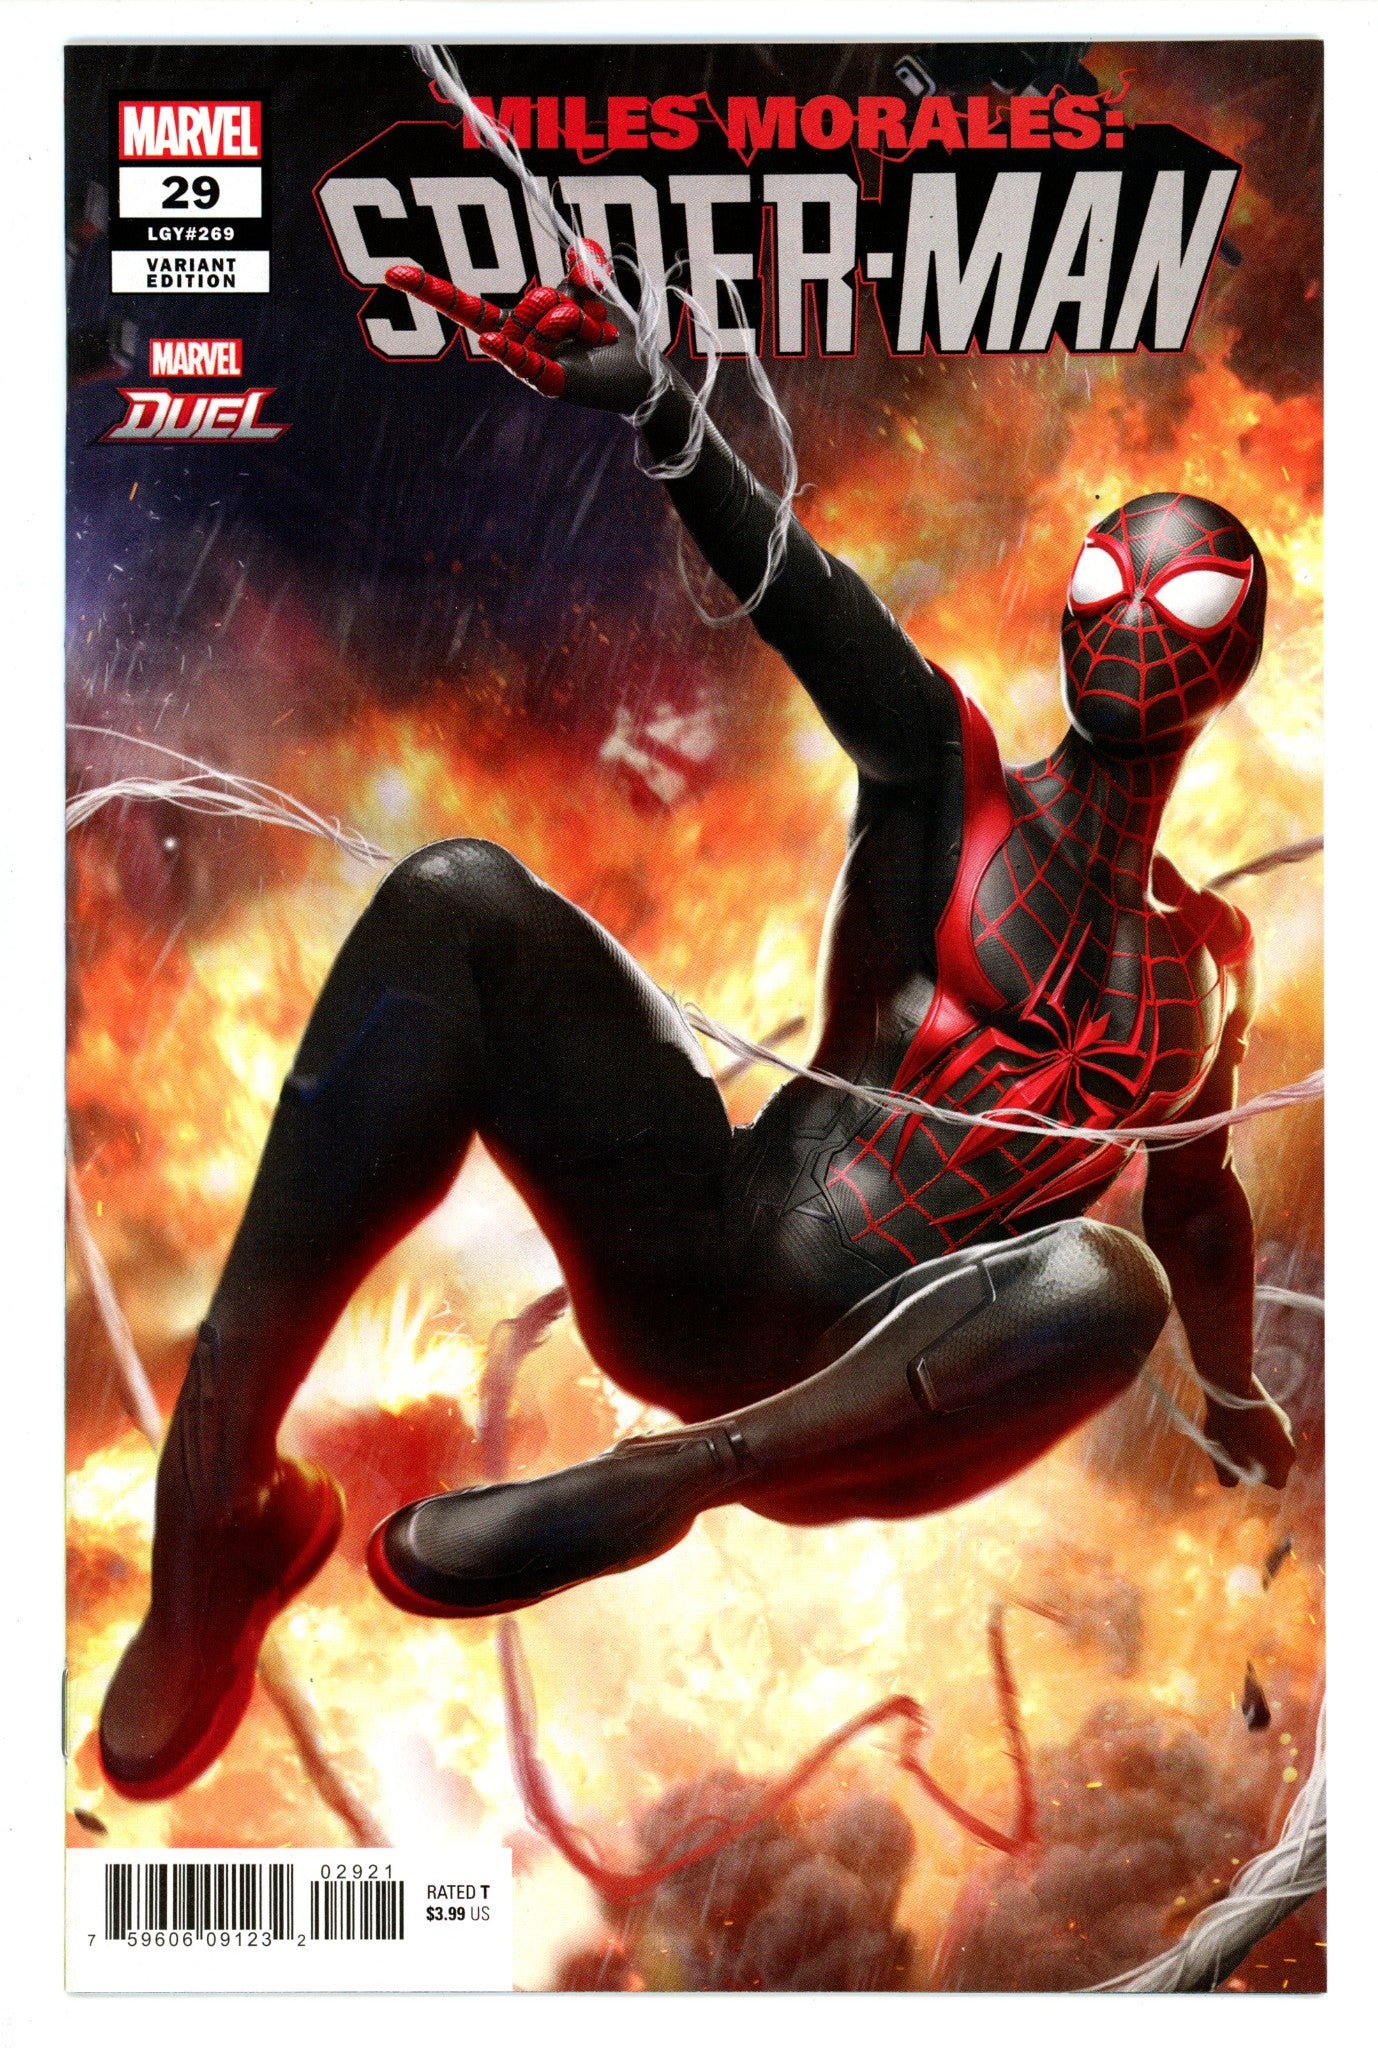 Miles Morales: Spider-Man Vol 1 29 (269)High Grade(2021) NetEaseVariant